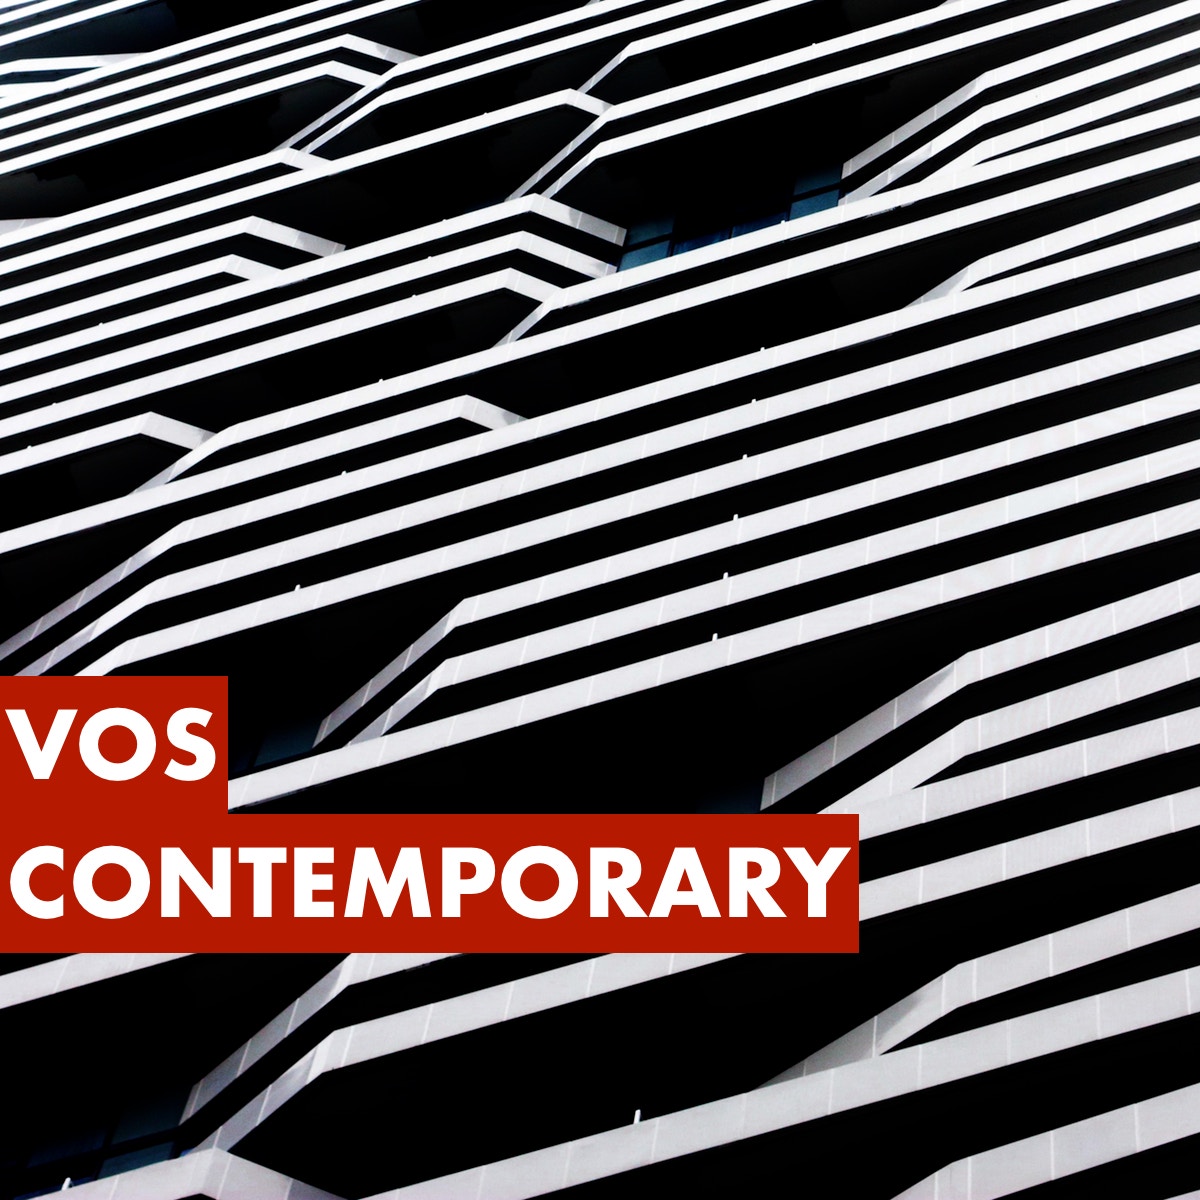 Vos Contemporary free soundbank by Rast Sound